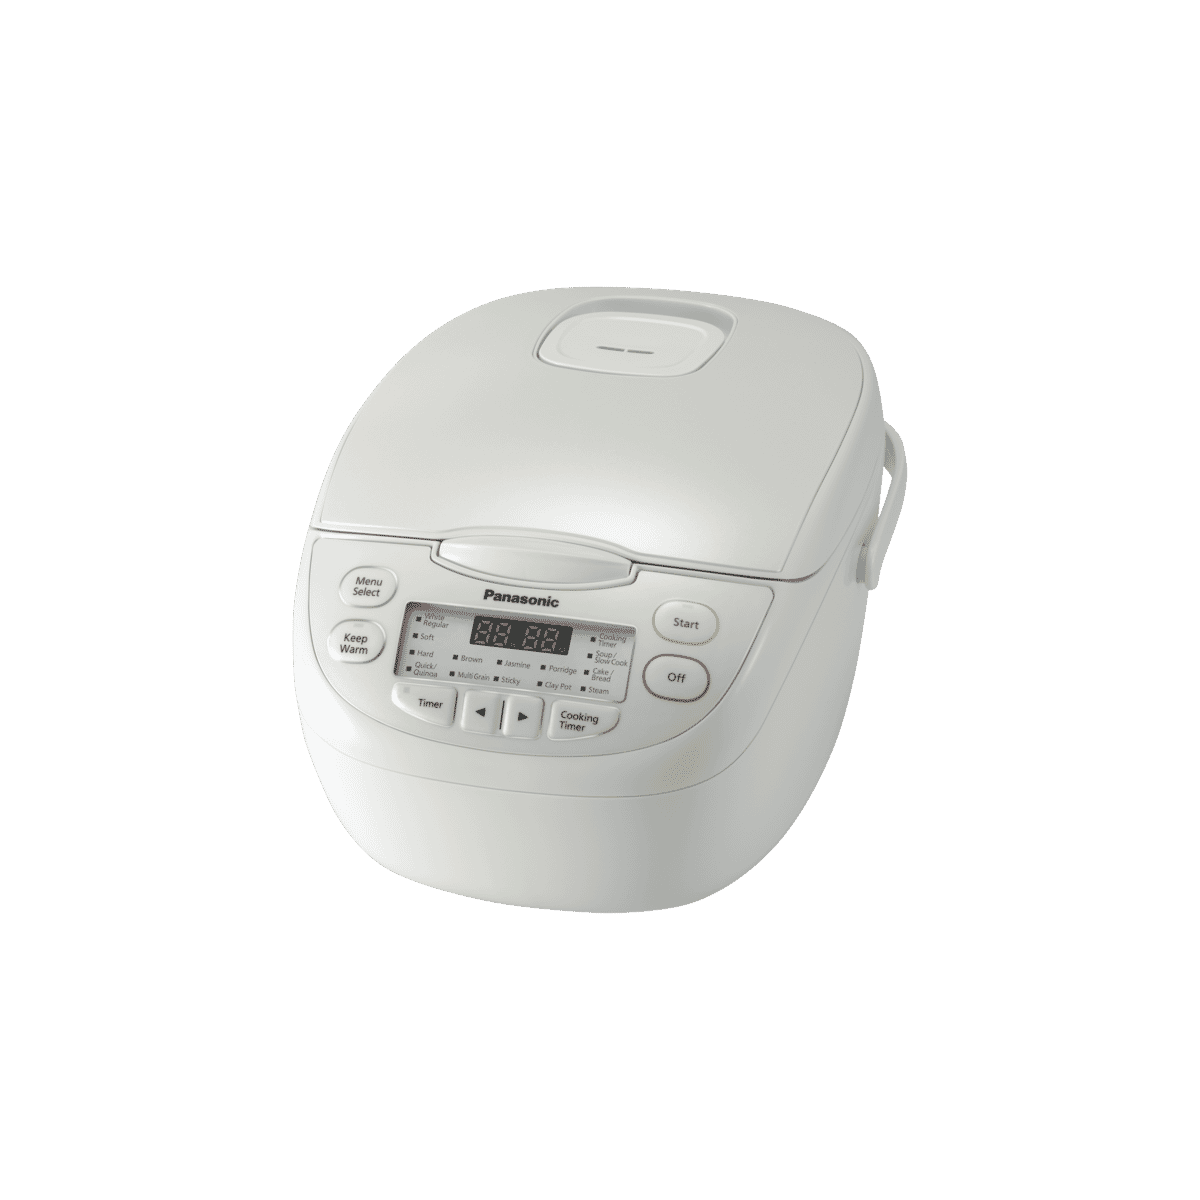 Panasonic Deluxe 10 Cup Rice Cooker SR-CN188WST